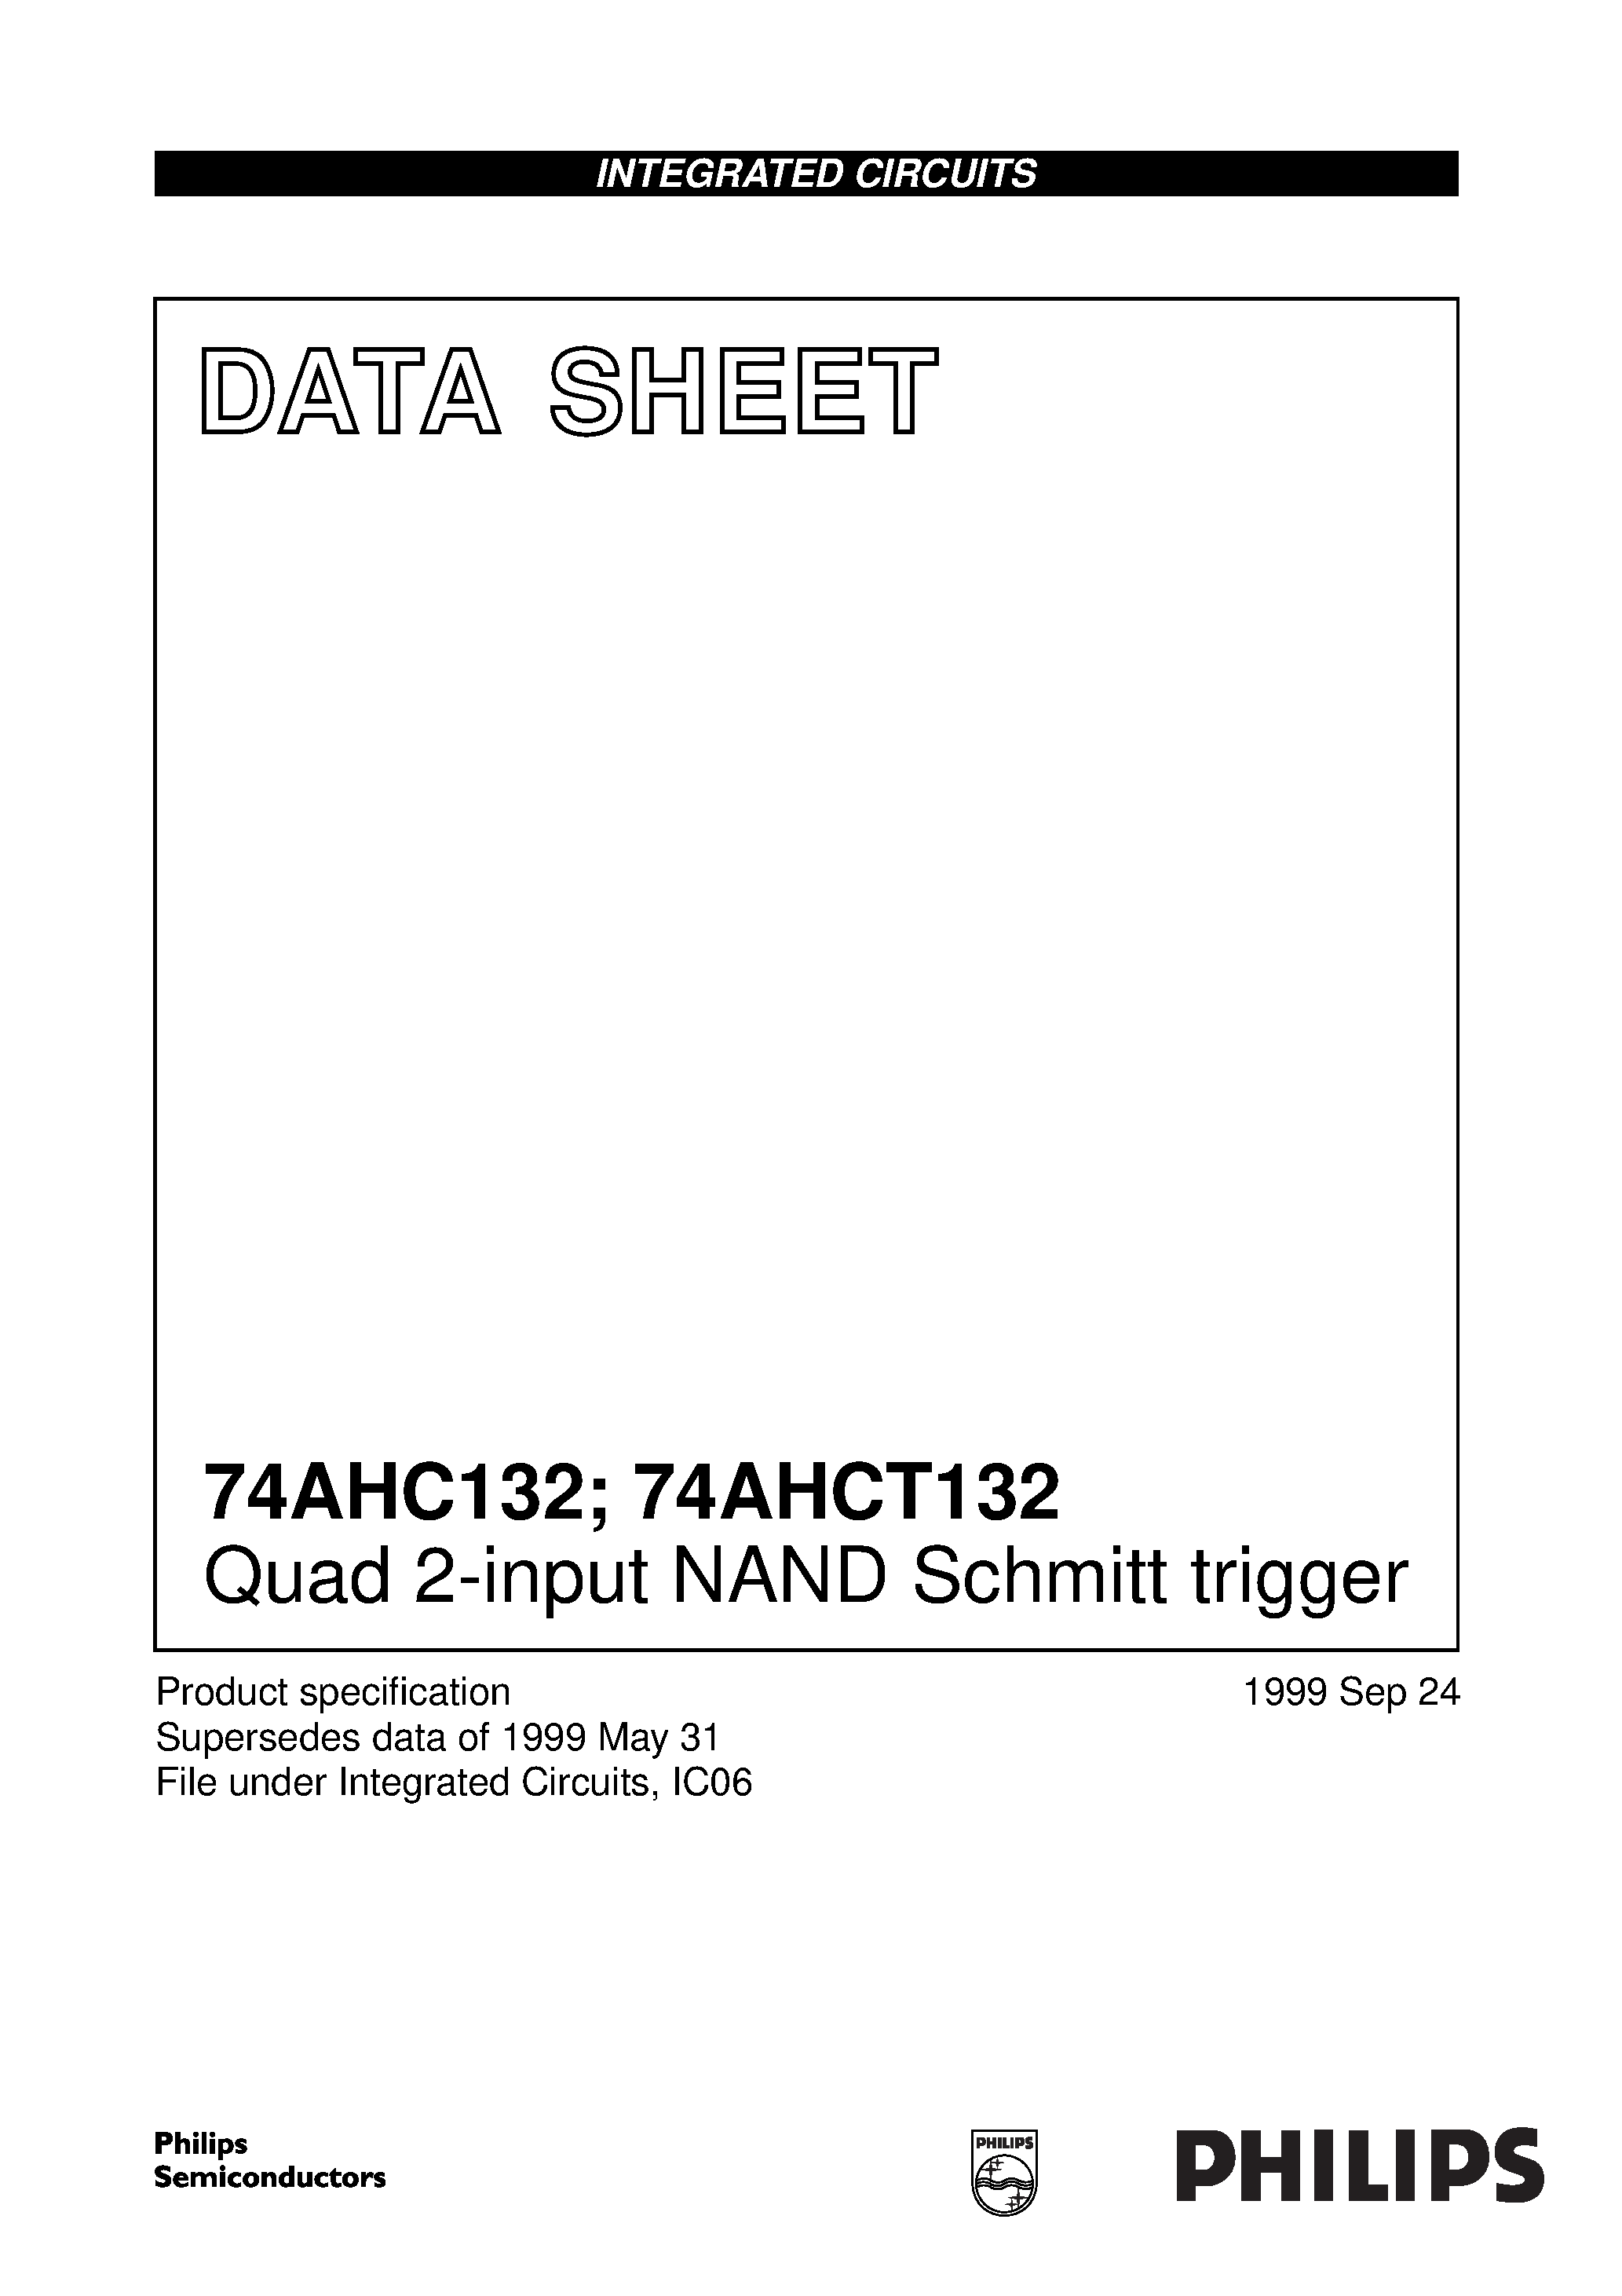 Даташит 74AHC132PWDH - Quad 2-input NAND Schmitt trigger страница 1